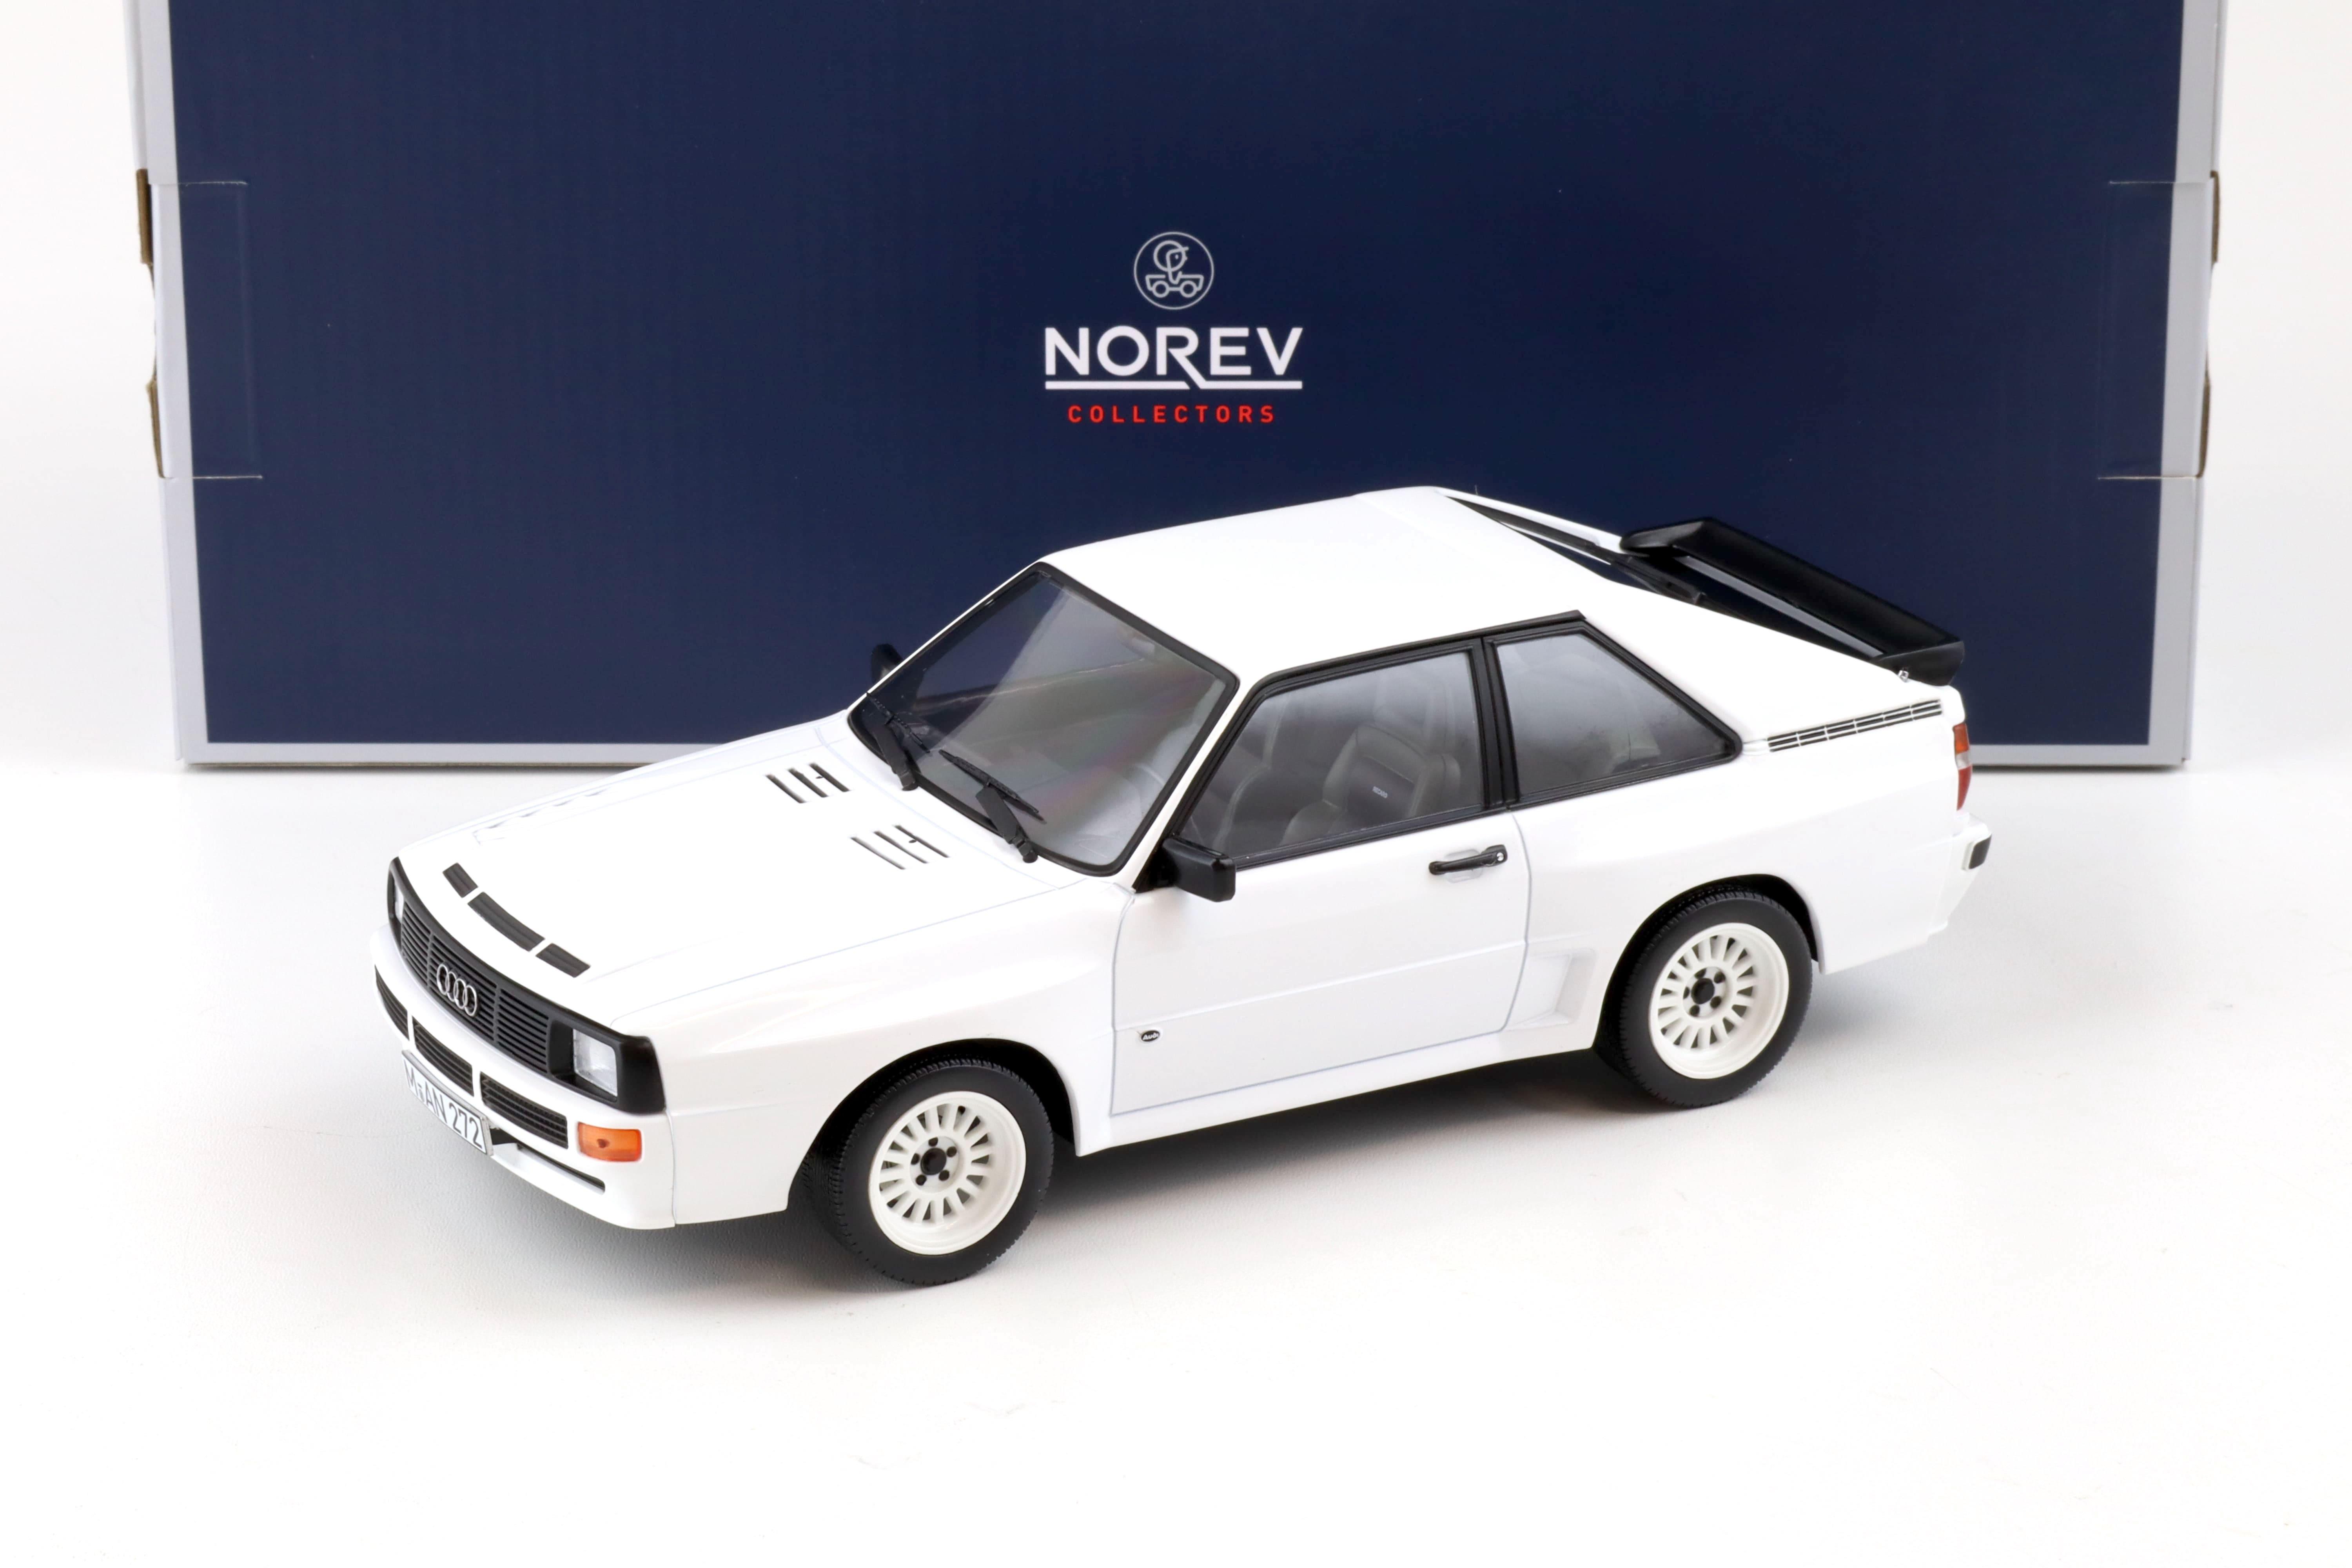 1:18 Norev Audi Sport Quattro 1985 white